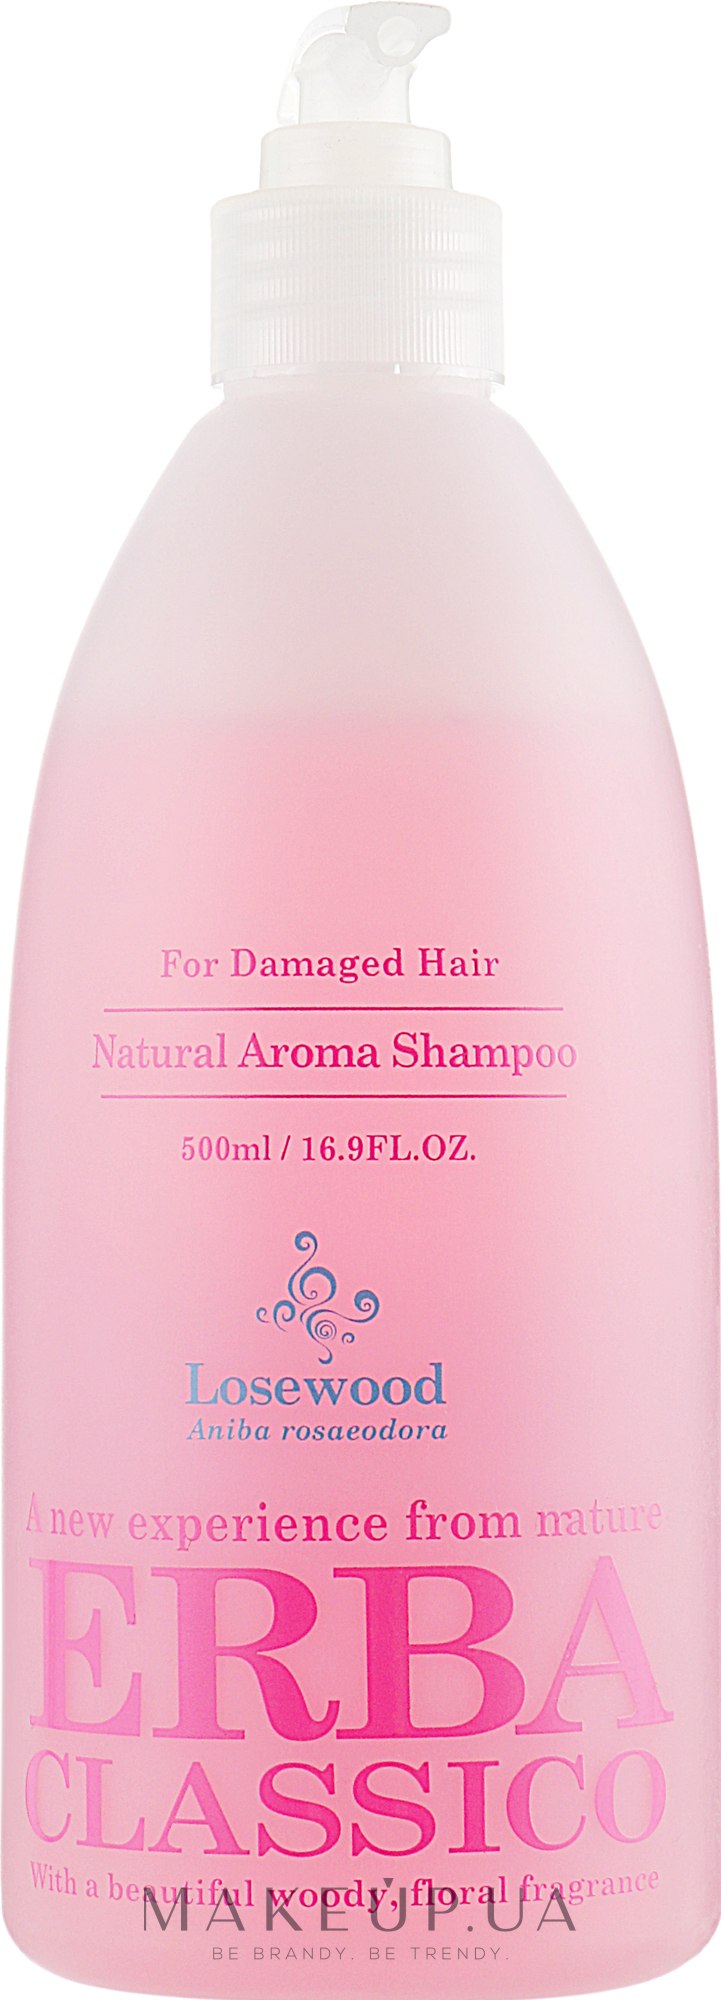 Шампунь для волосся, з екстрактом трояндового дерева  - Erba Classico Rosewood Hair Shampoo — фото 500ml